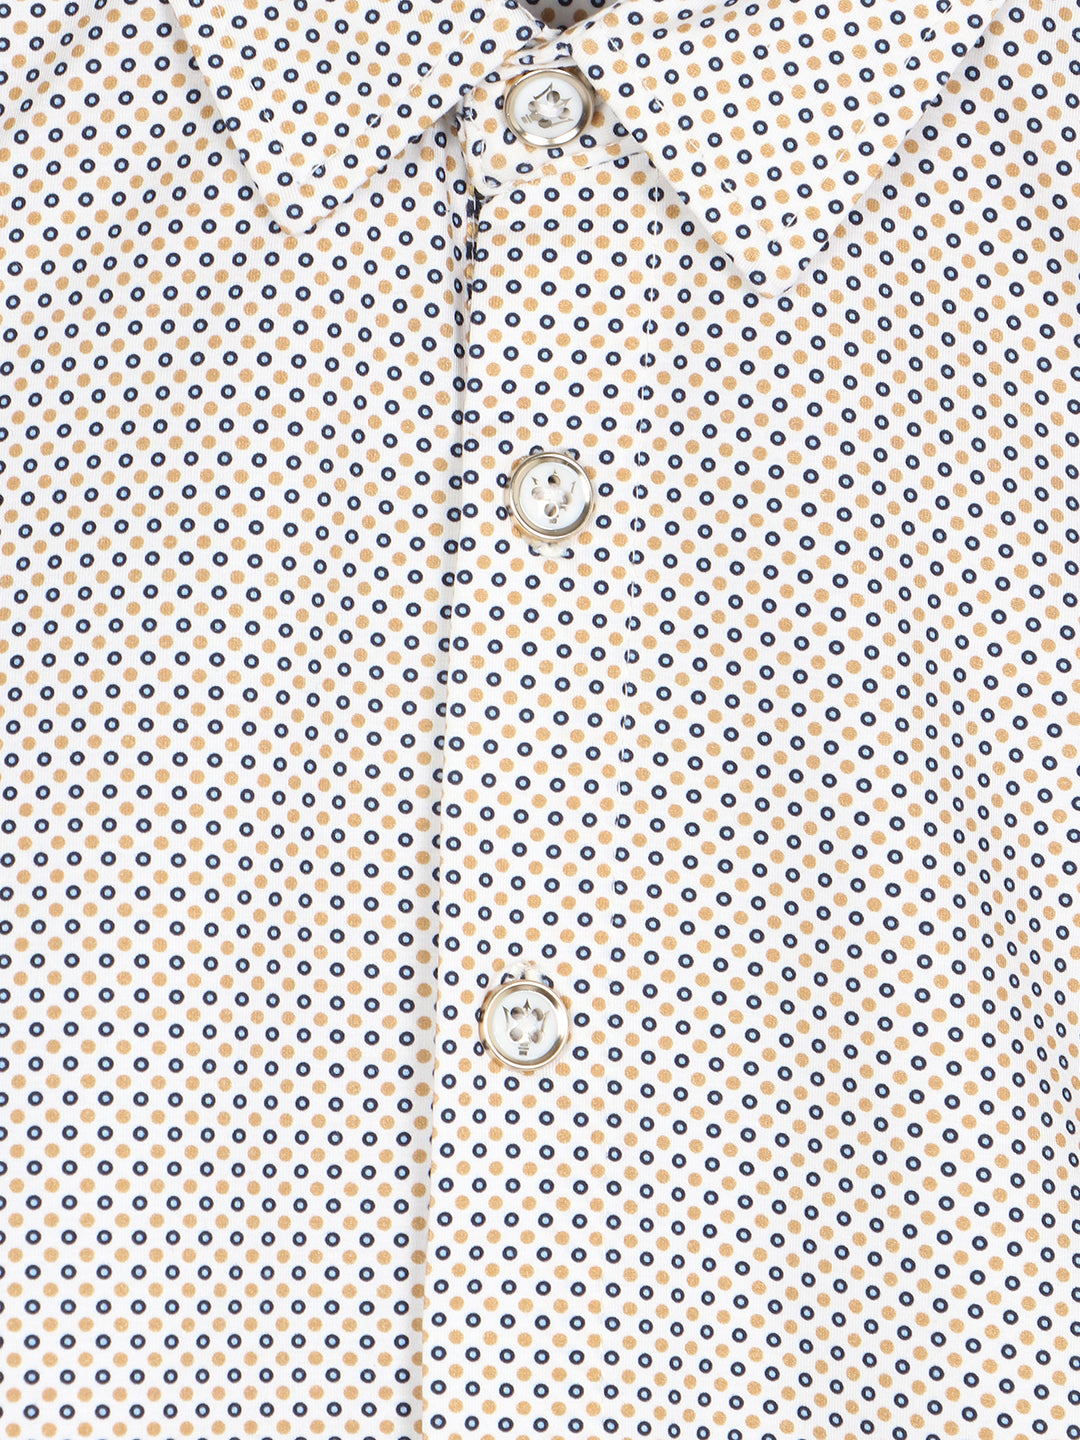 Nautinati Boys Standard Micro-Ditsy Printed Pure Cotton Casual Shirt